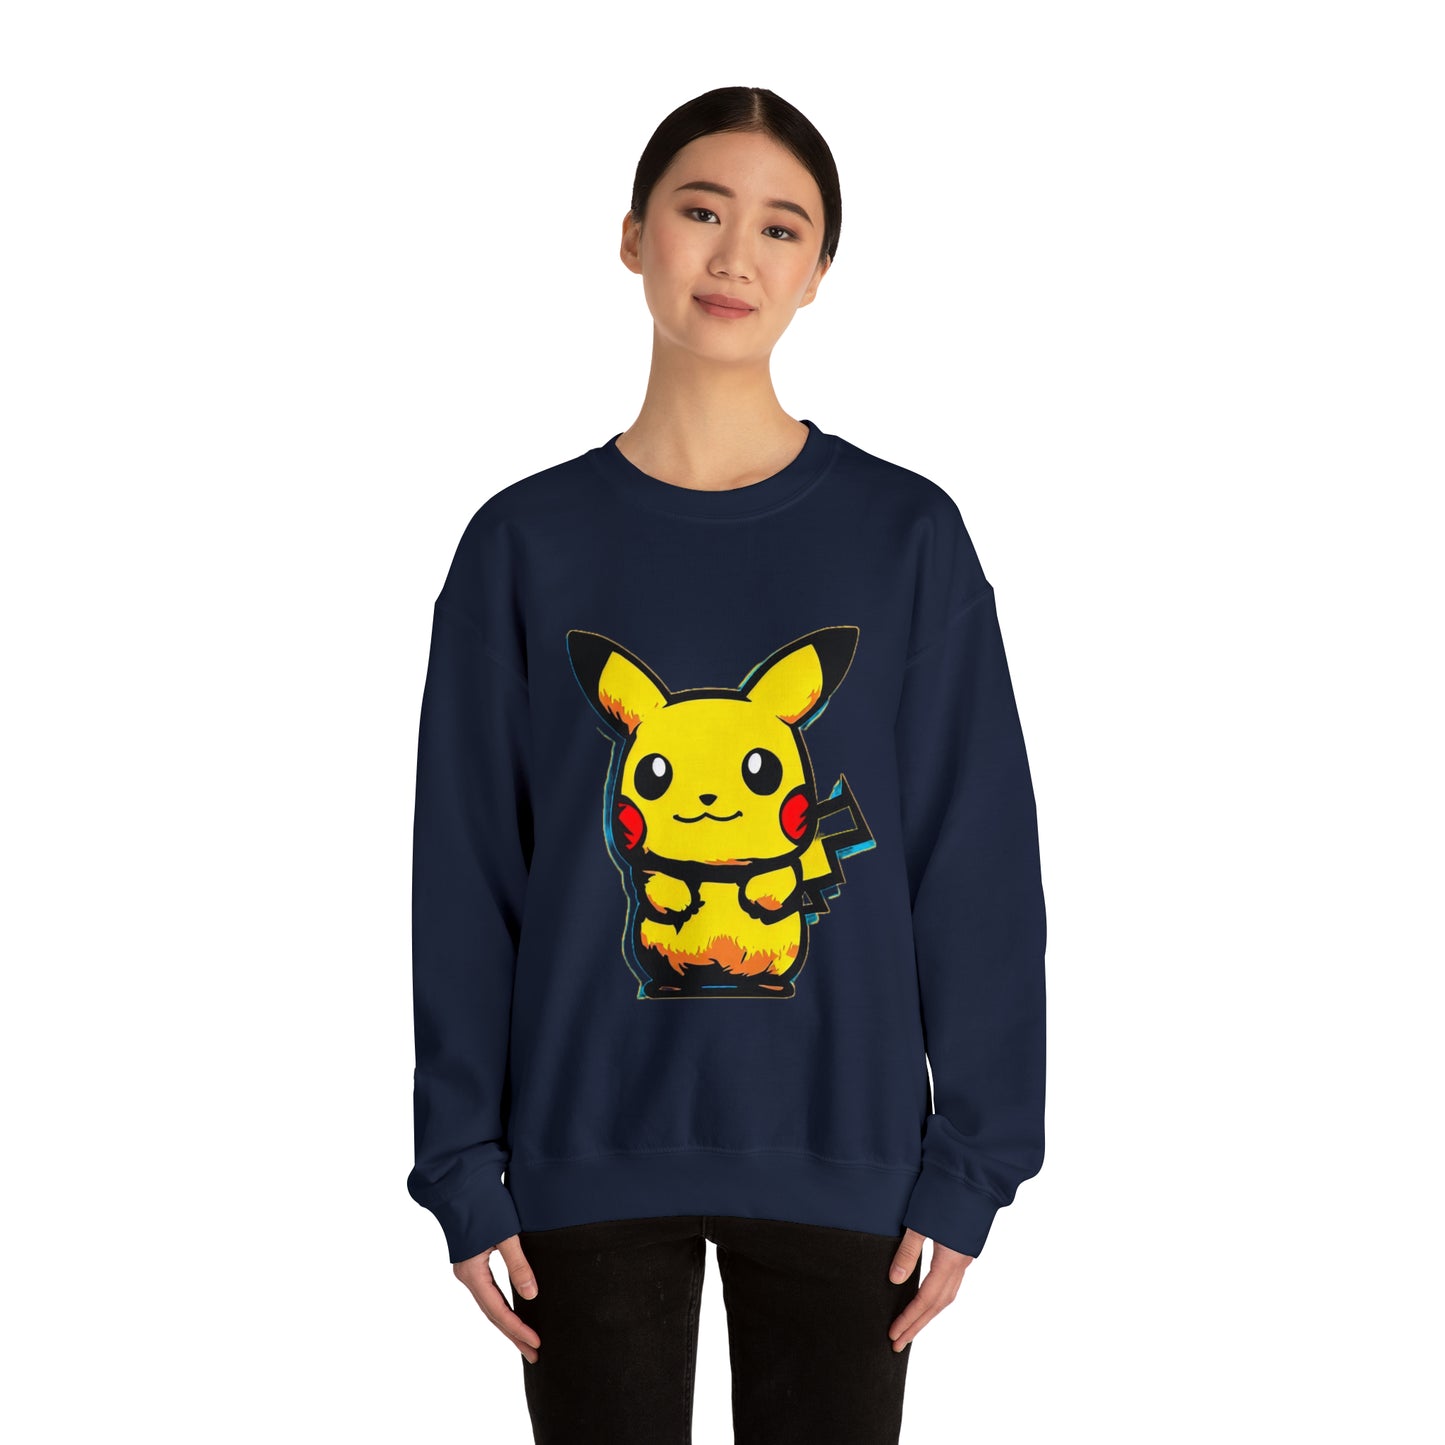 Pokemon Pika Crewneck Sweatshirt